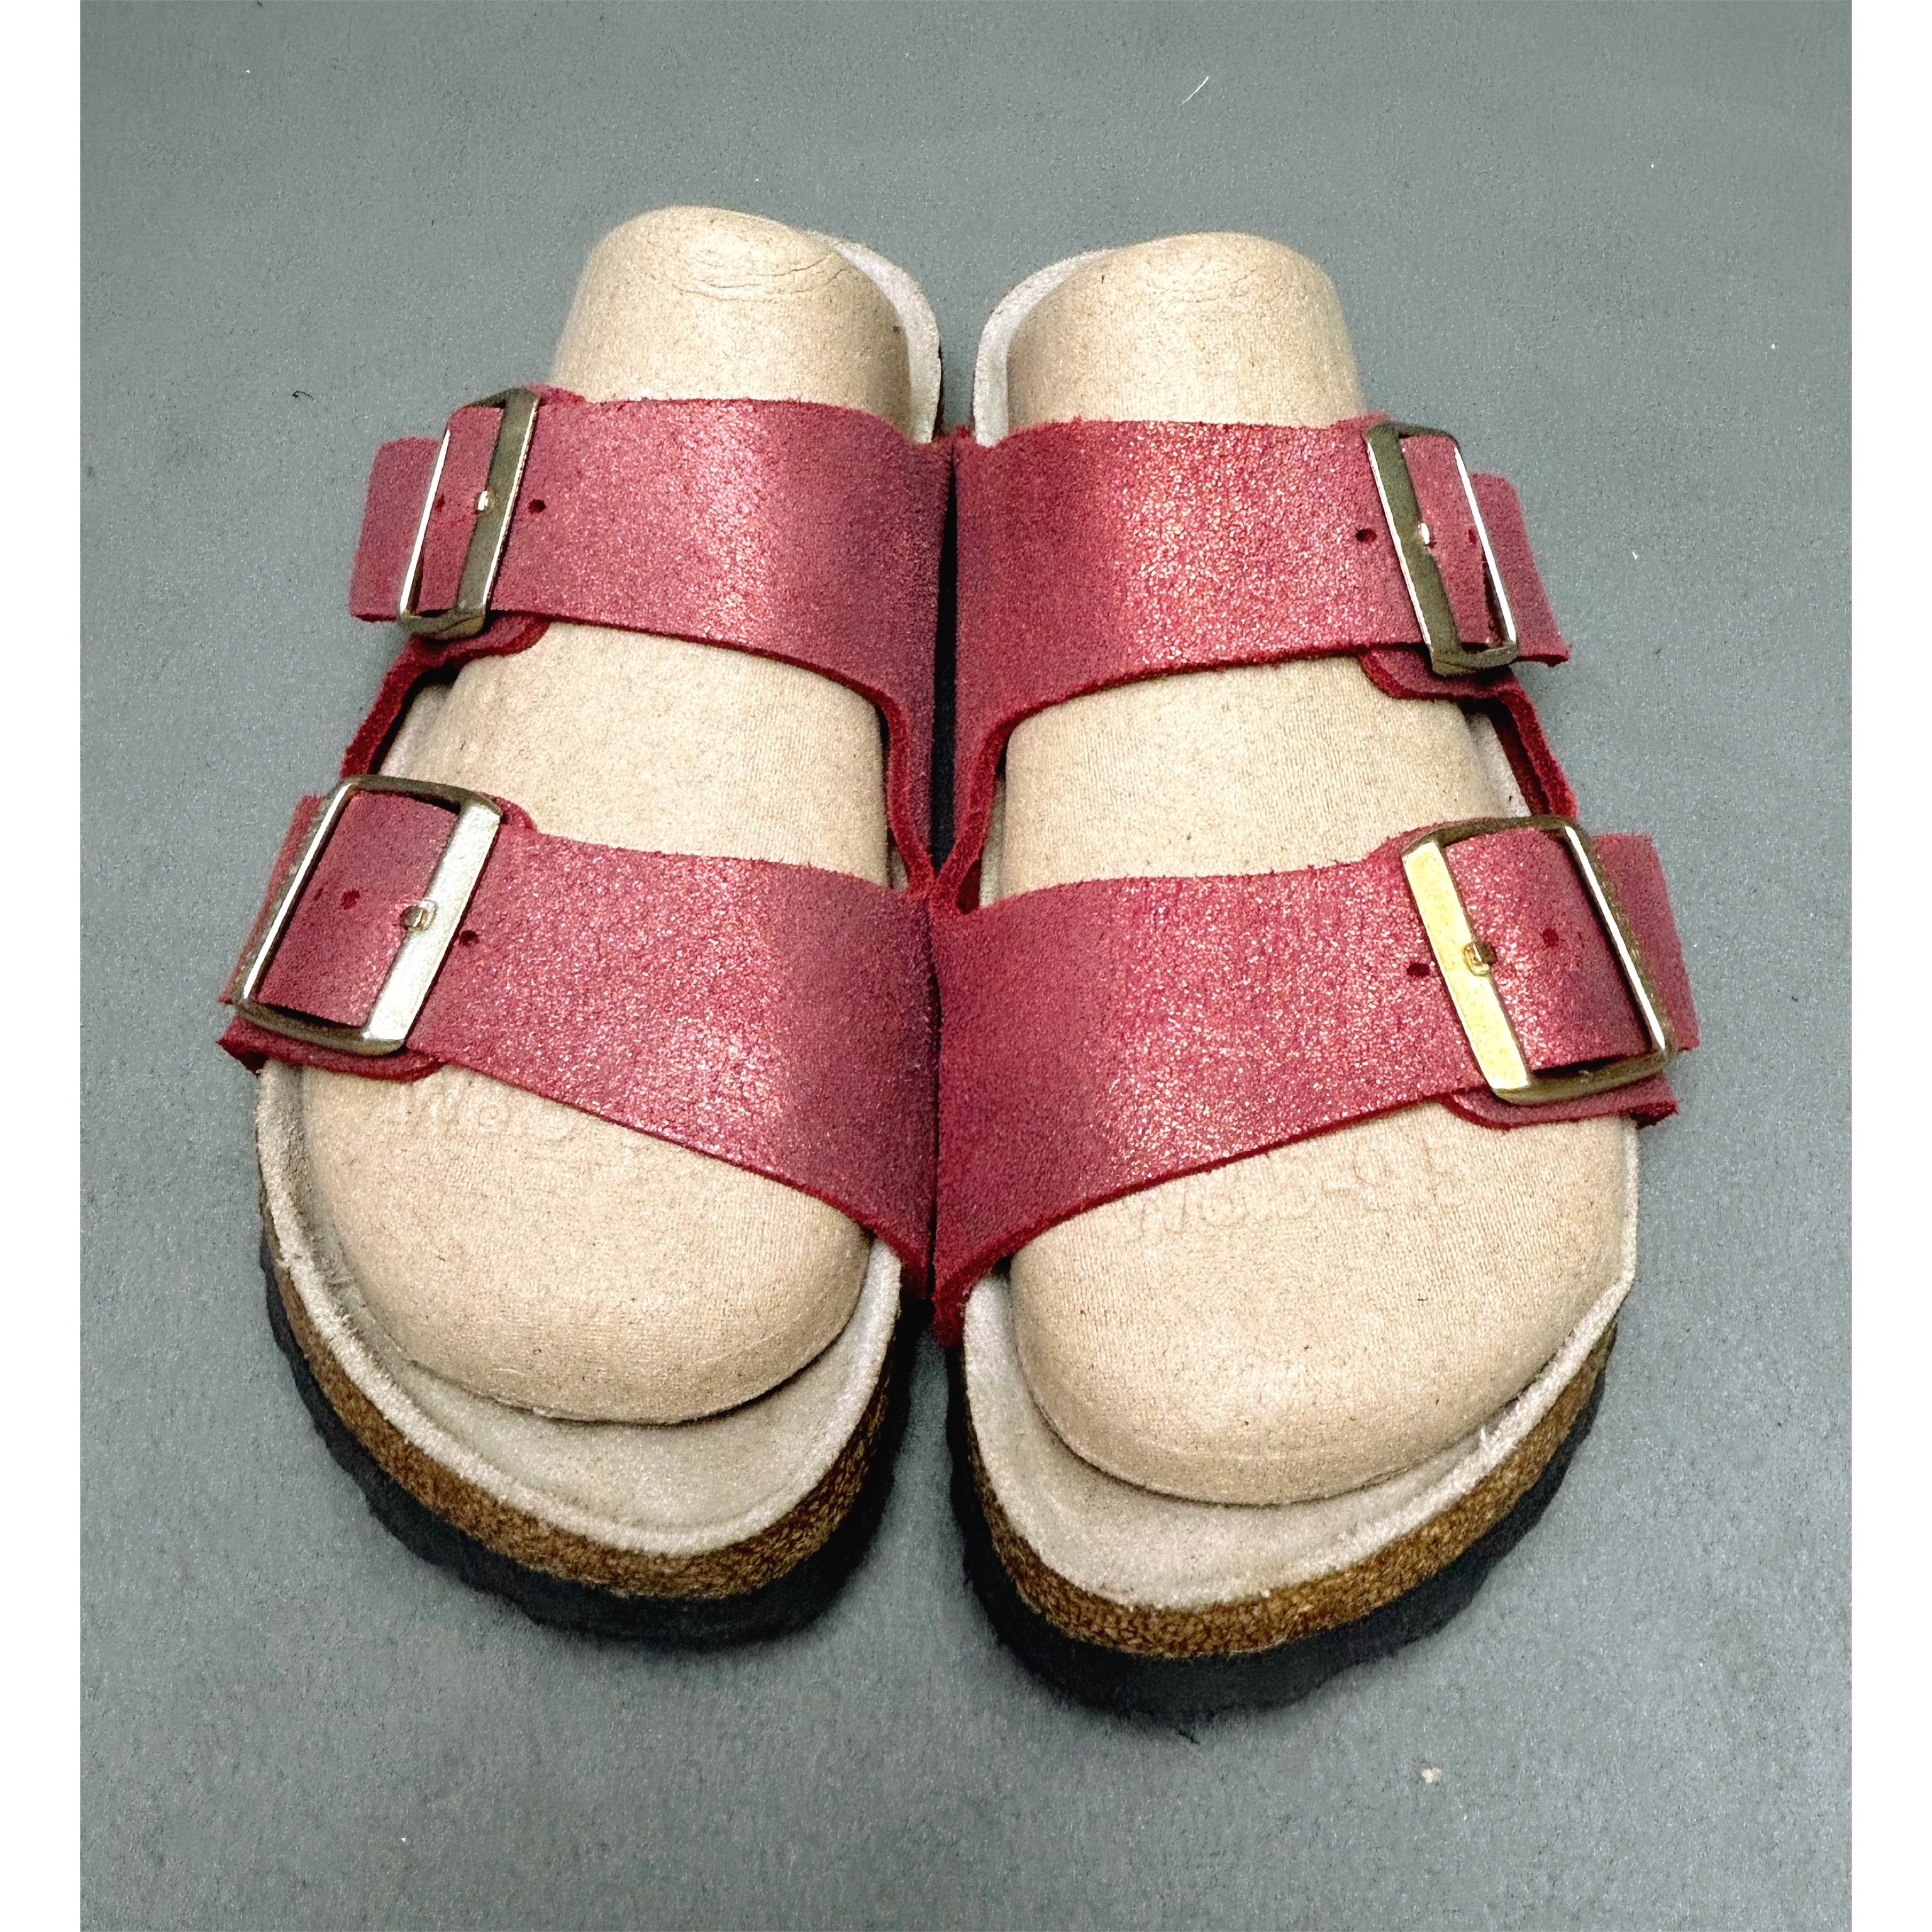 Birkenstock red leather Arizona sandals, size 7-7.5